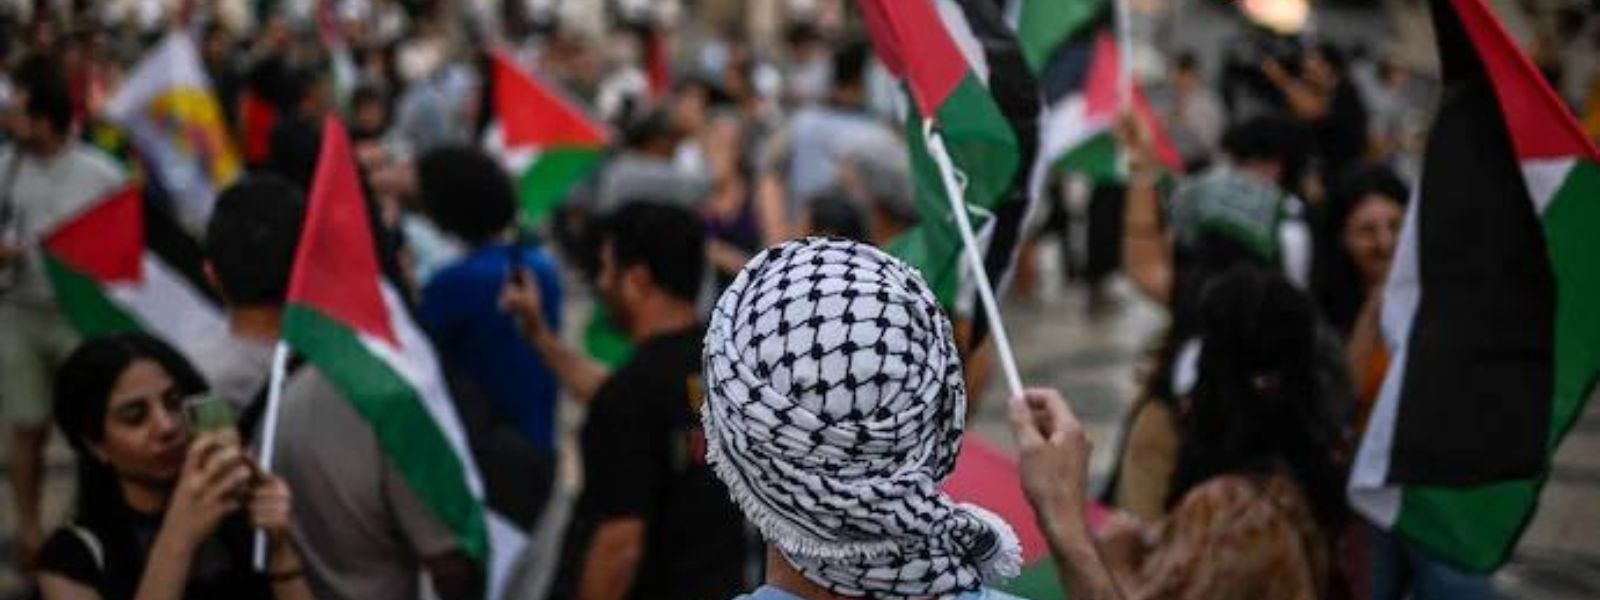 Norway, Ireland, Spain to recognize Palestine